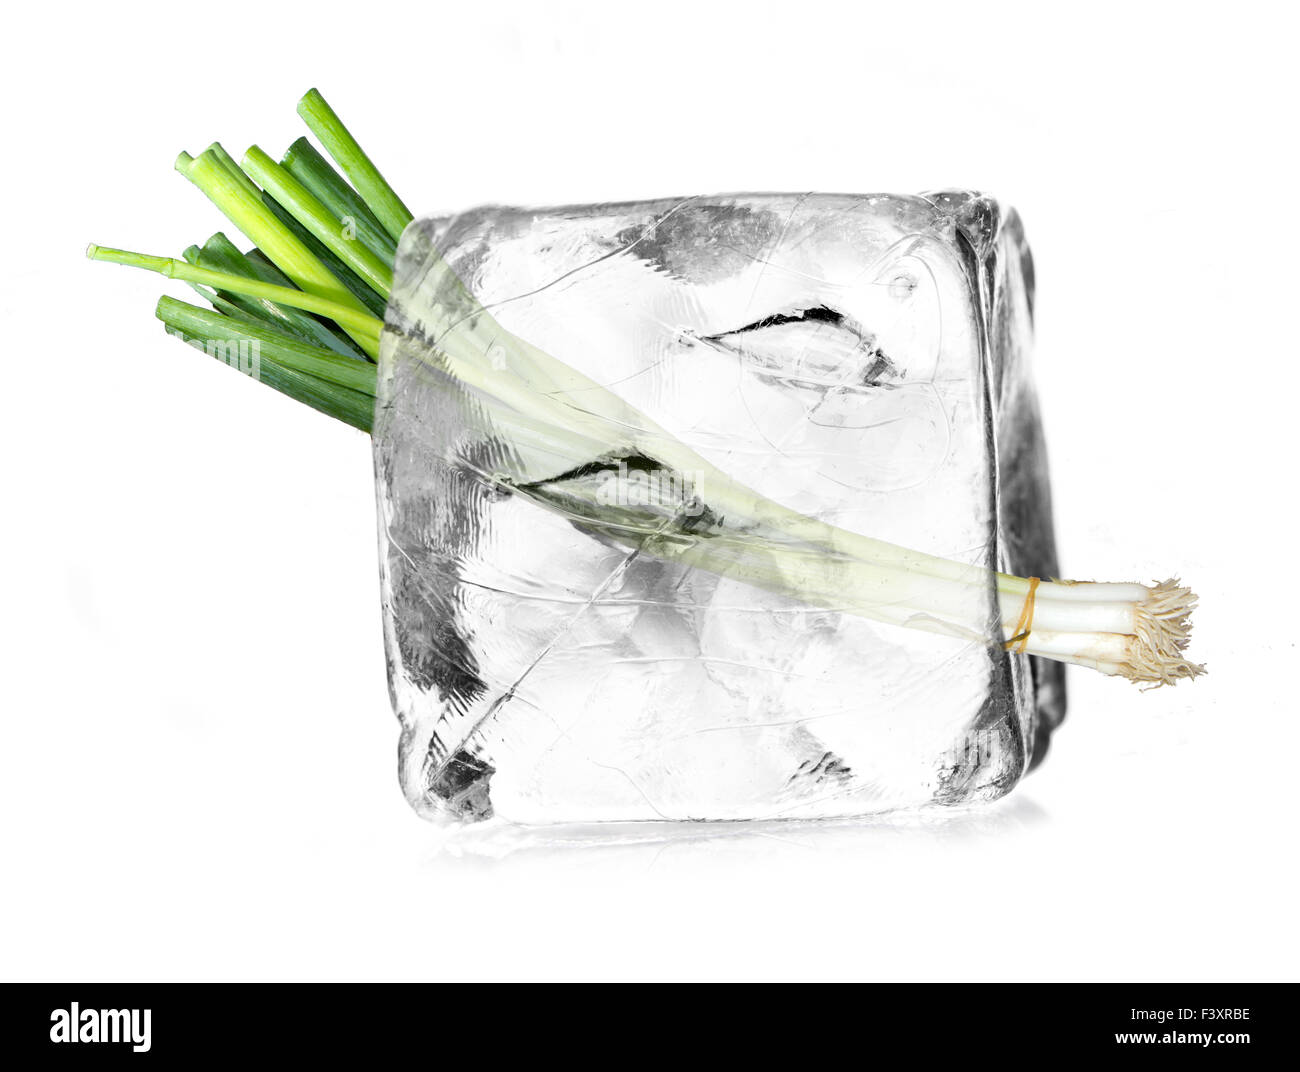 leek, allium in a ice cube isolated Stock Photo